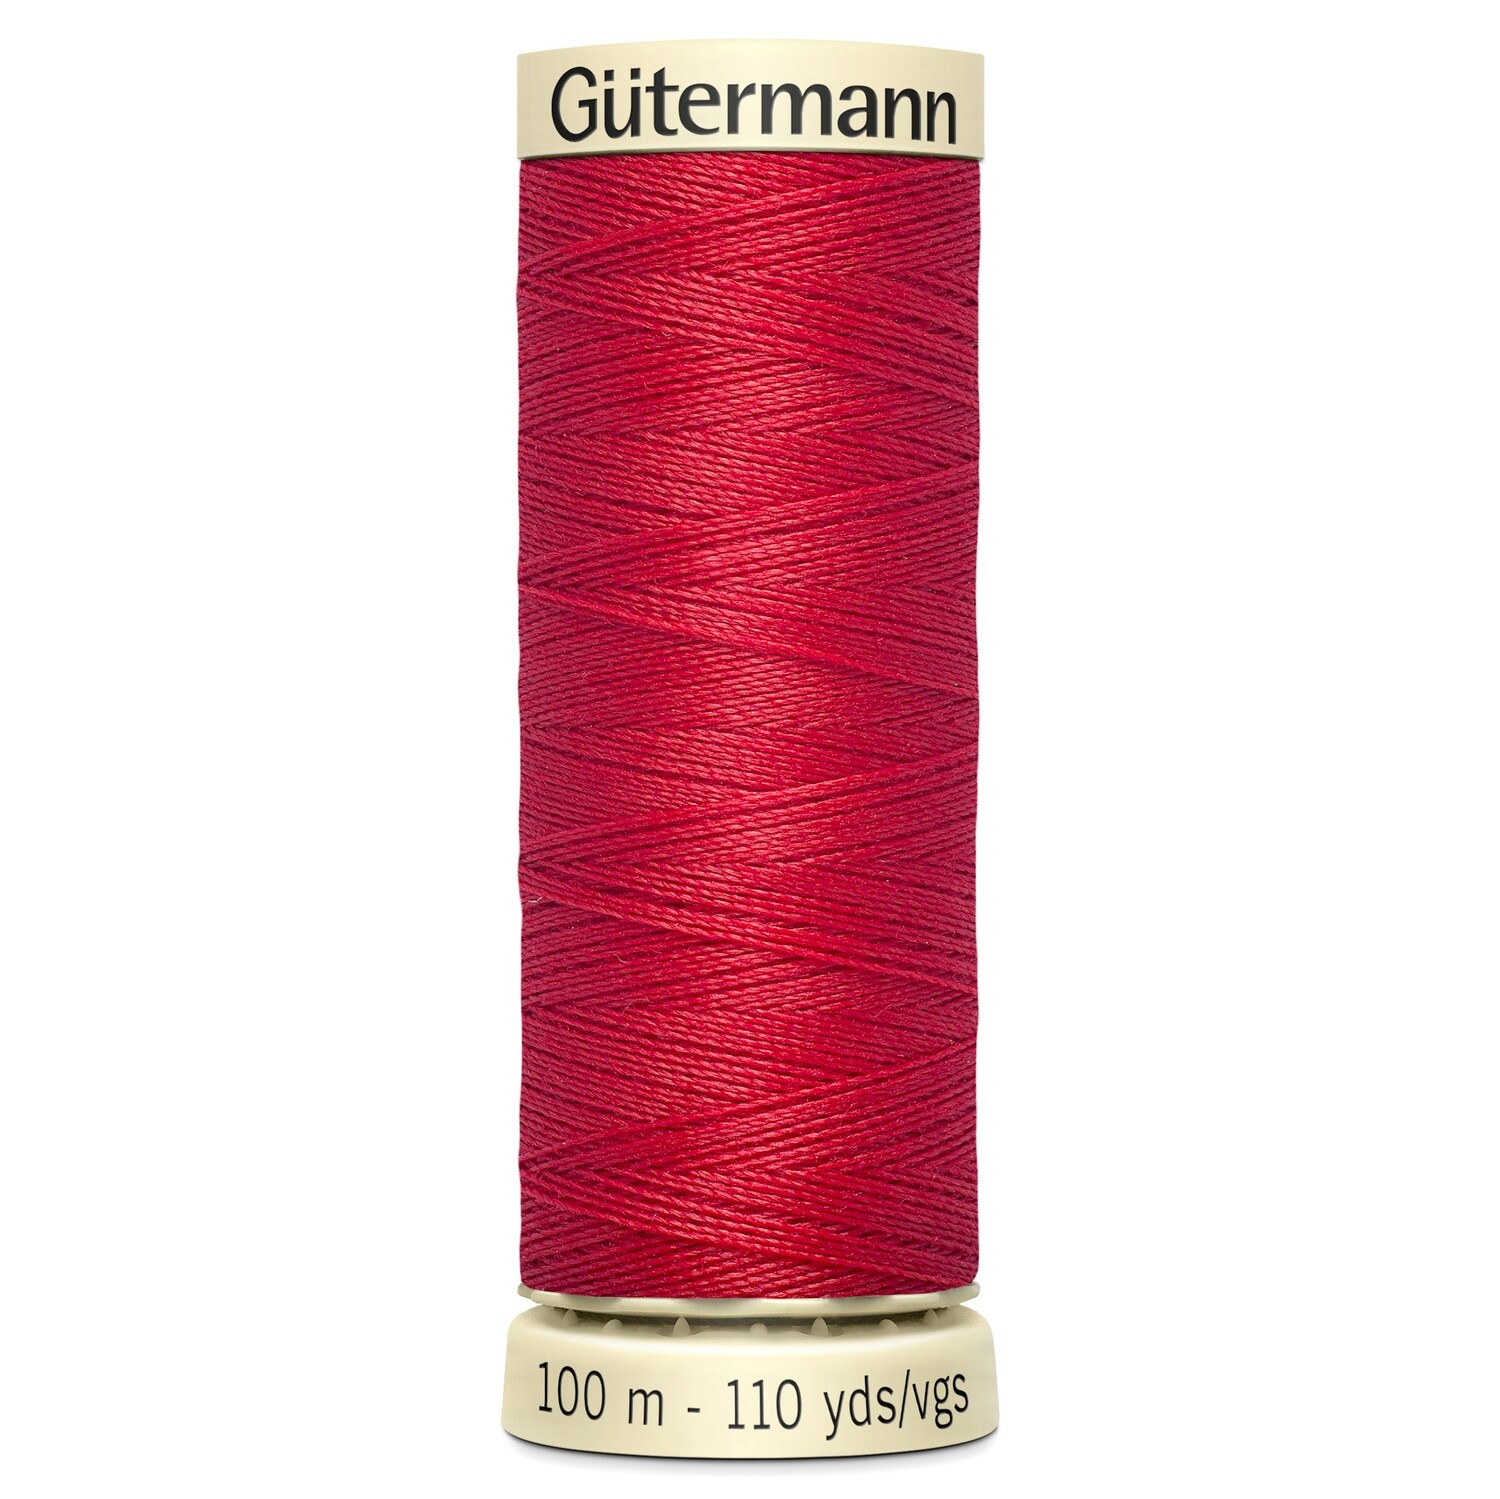 Gutermann Sew-All thread 365